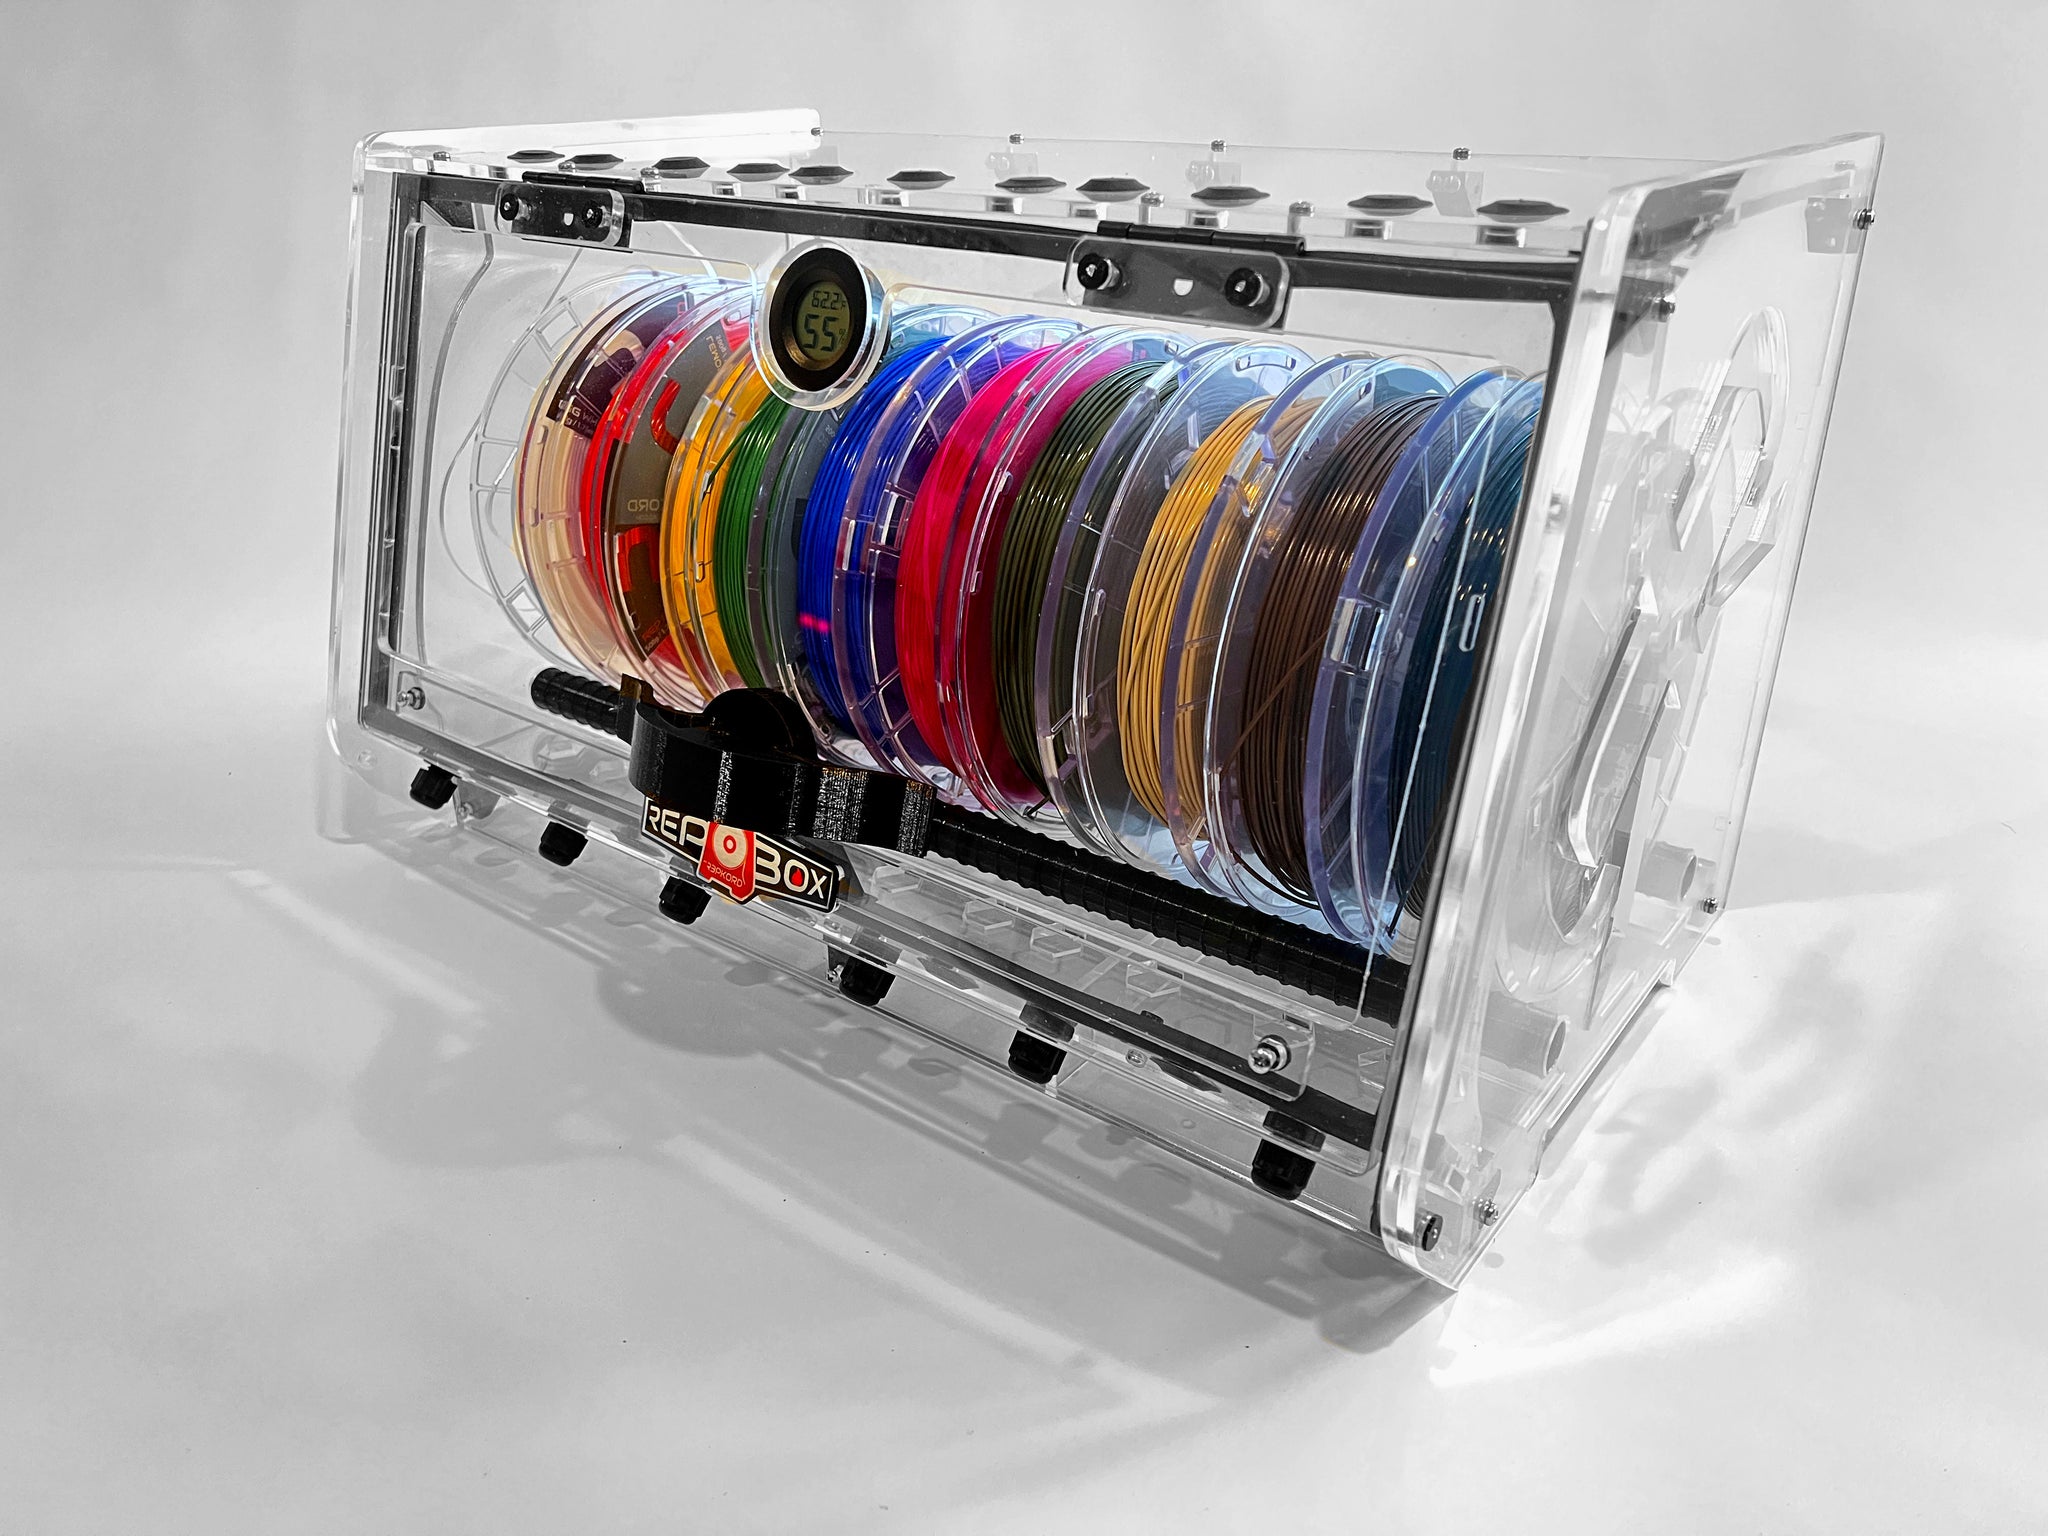 KIT RepBox Your Own: "THE" 3D Printing Filament Management – Repkord.com